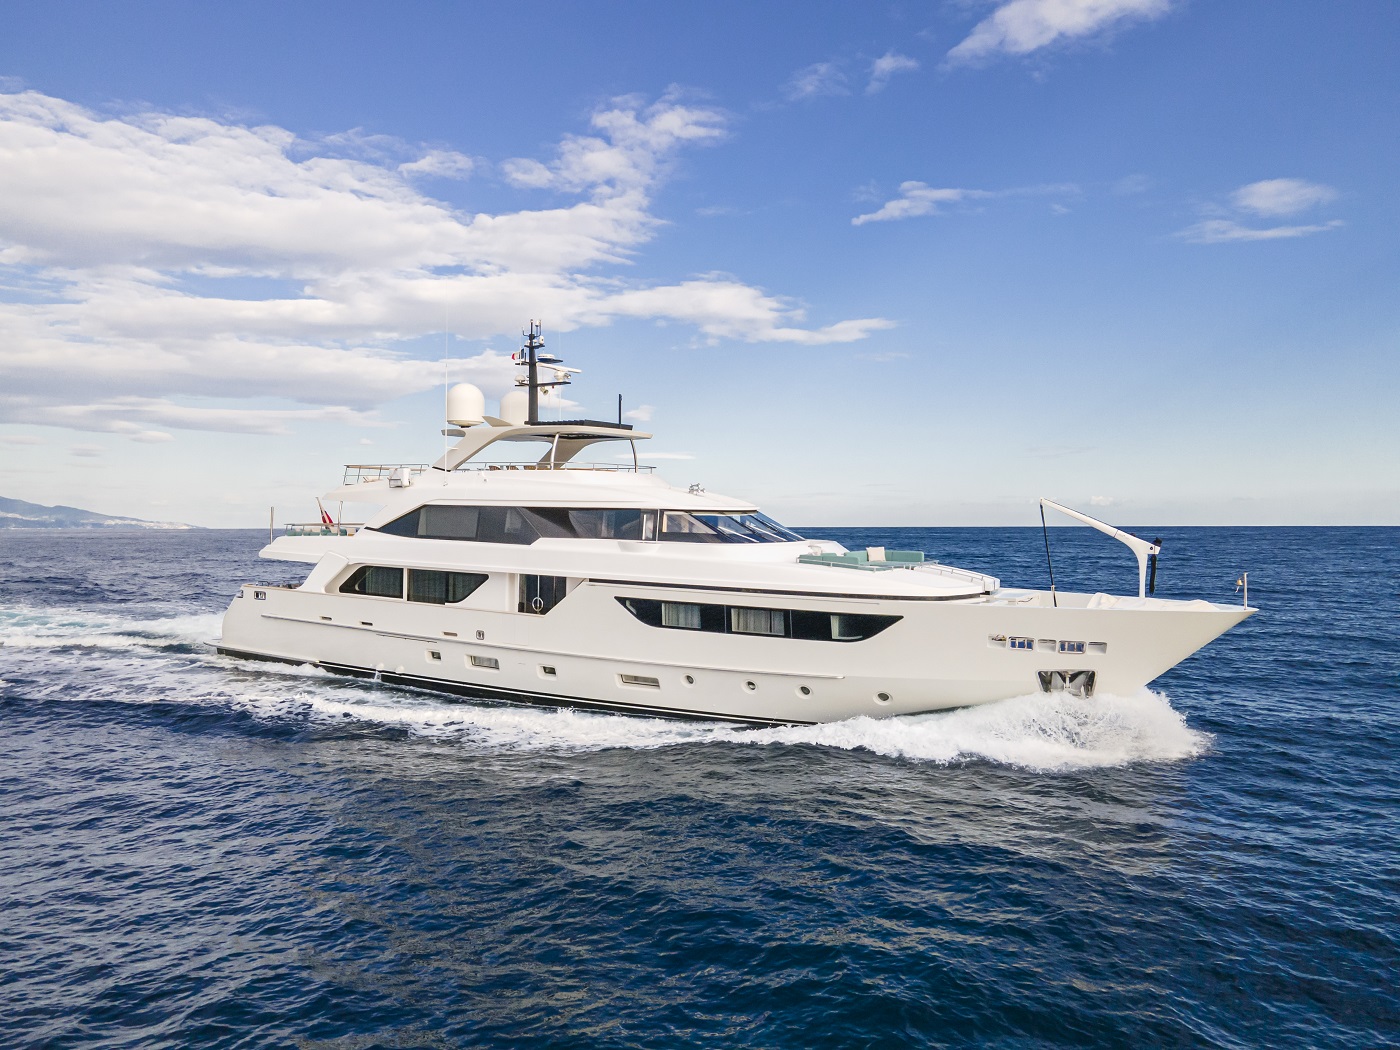 Visit the yacht SOSA at the Monaco Yacht Show 2022